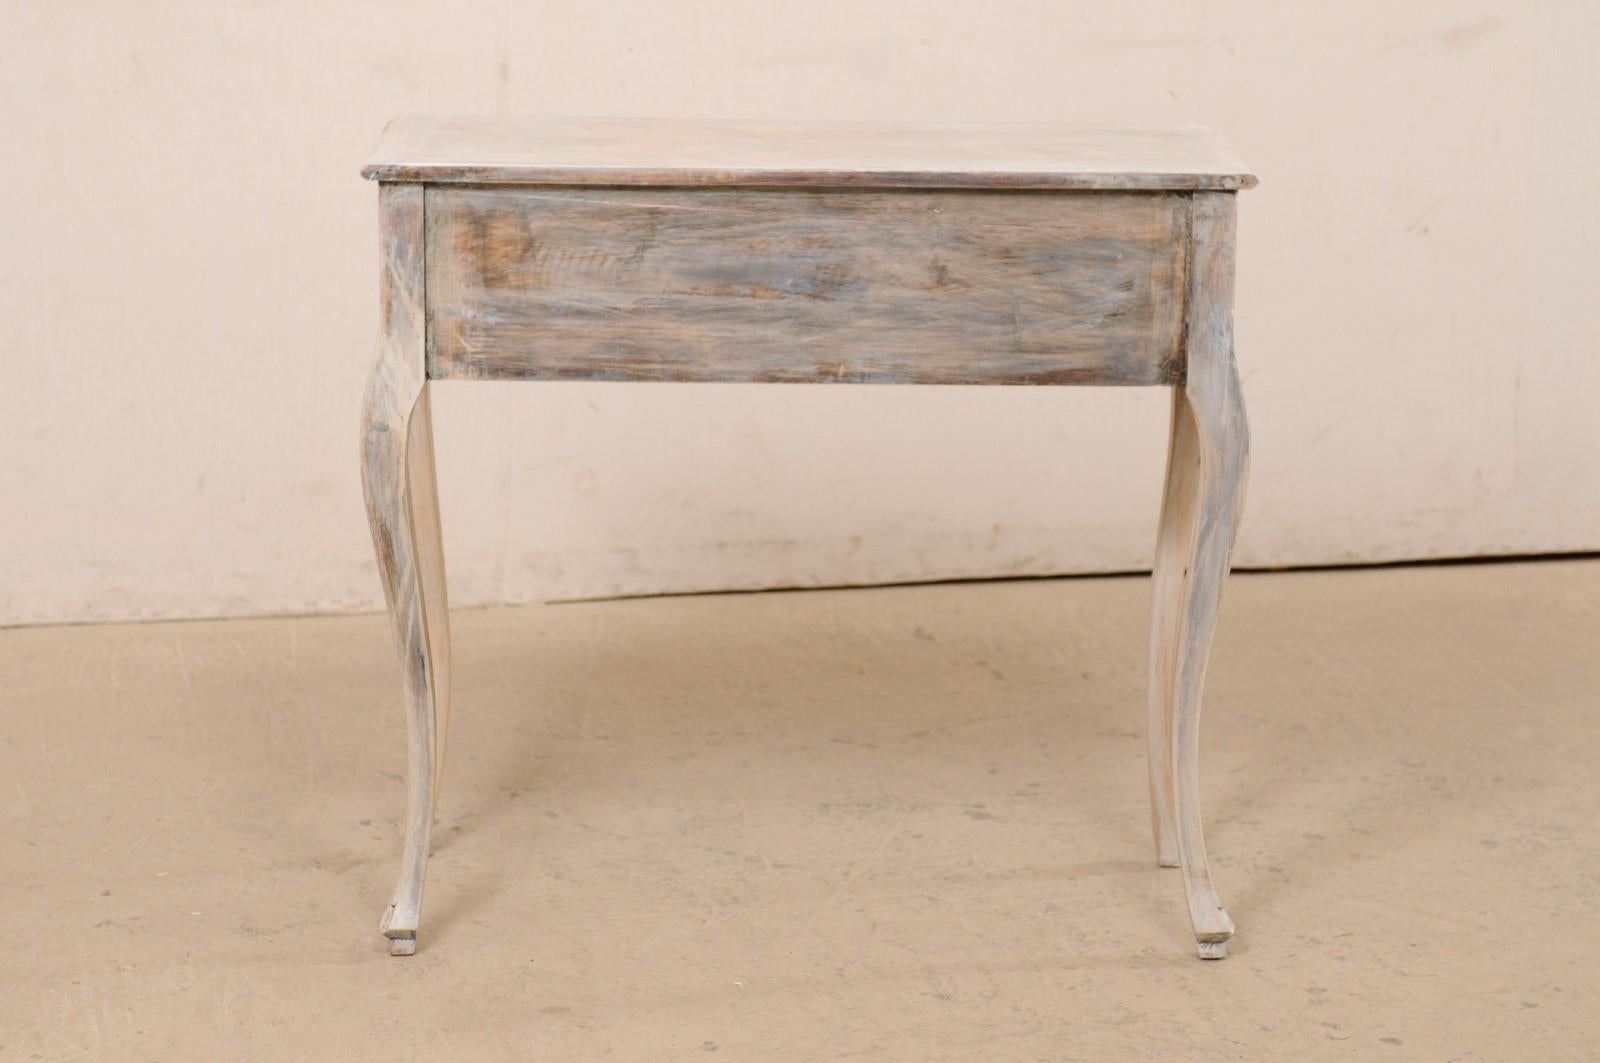 Wood Italian Petite-Sized Console Table w/Single Drawer & Cabriole Legs, Mid 20th c.